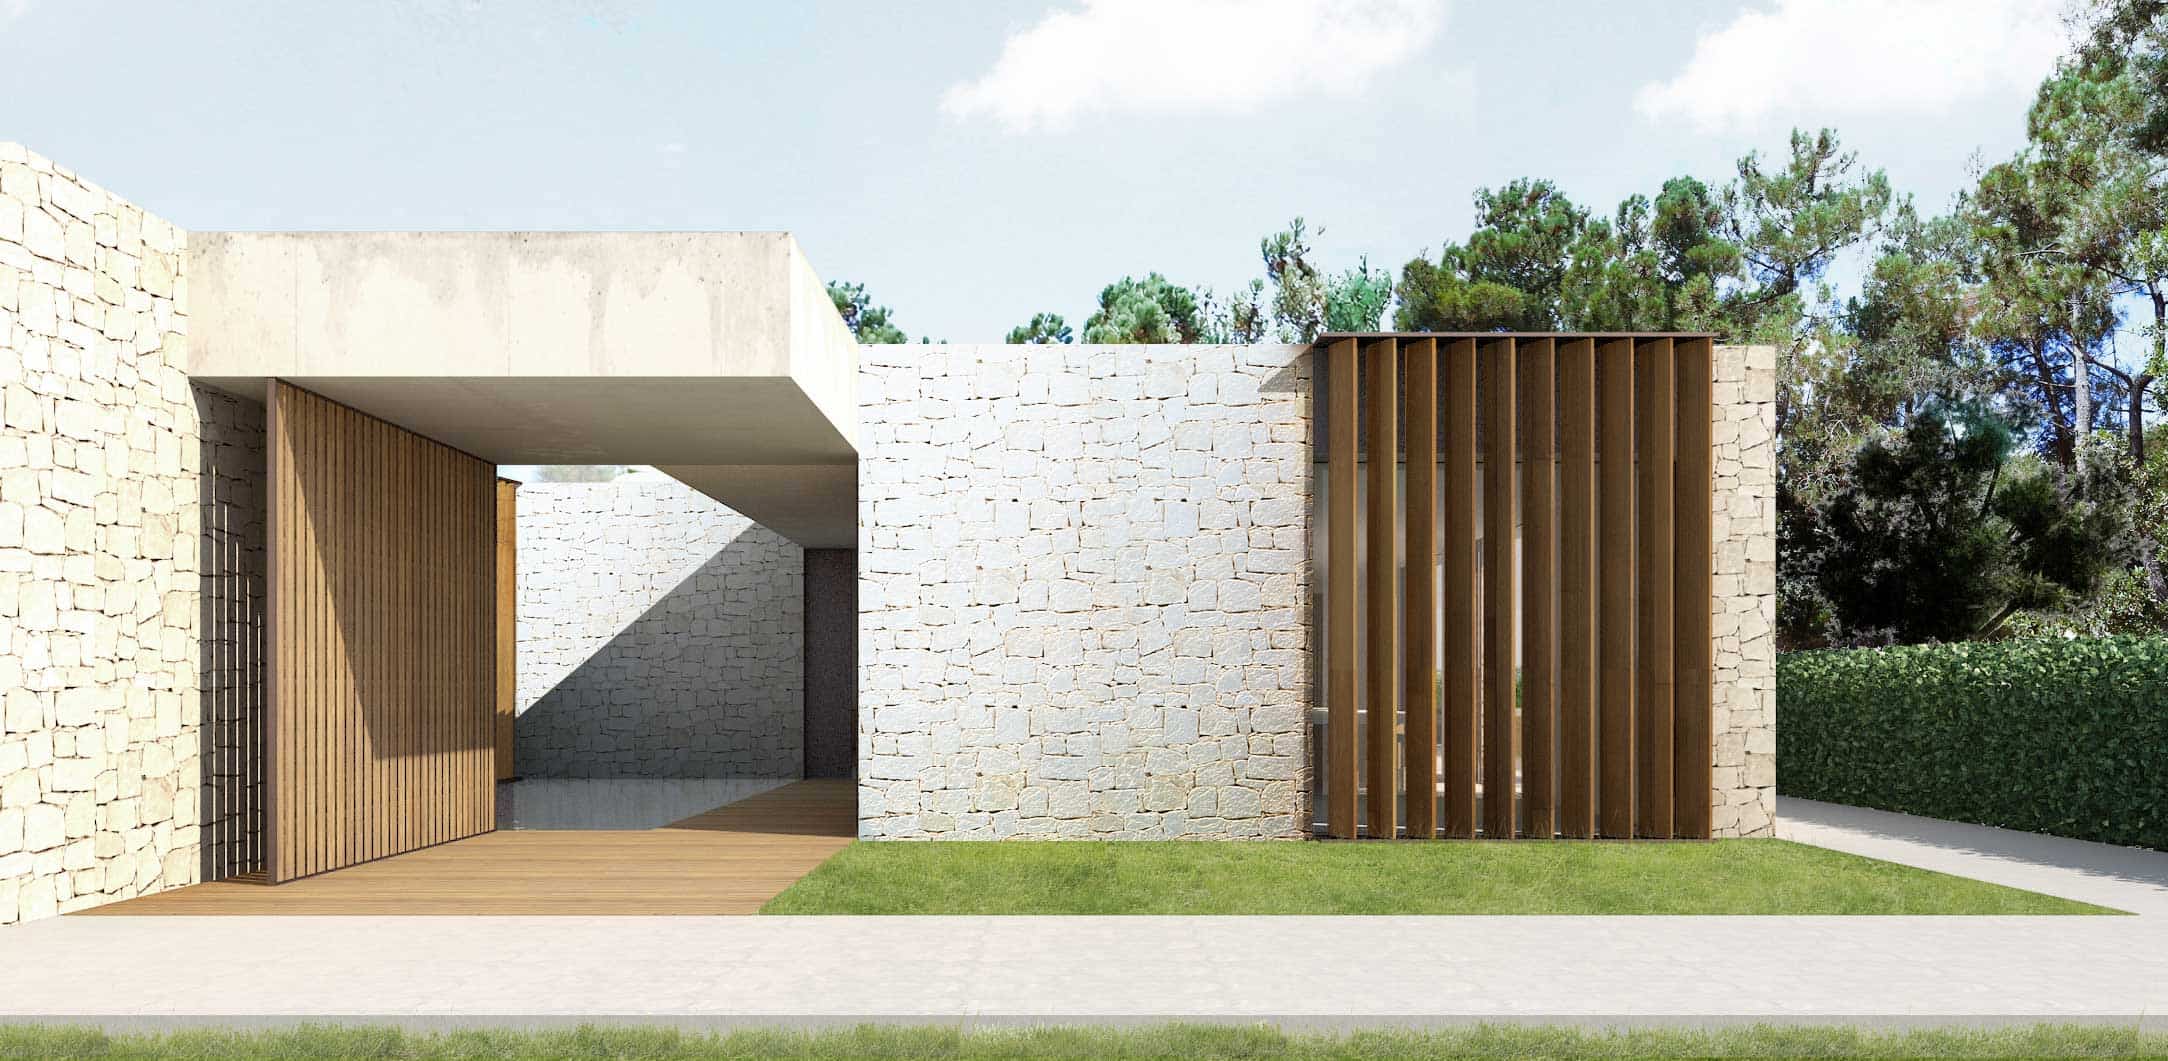 Casa en la Cañada, un espectacular proyecto del arquitecto Ramón Esteve